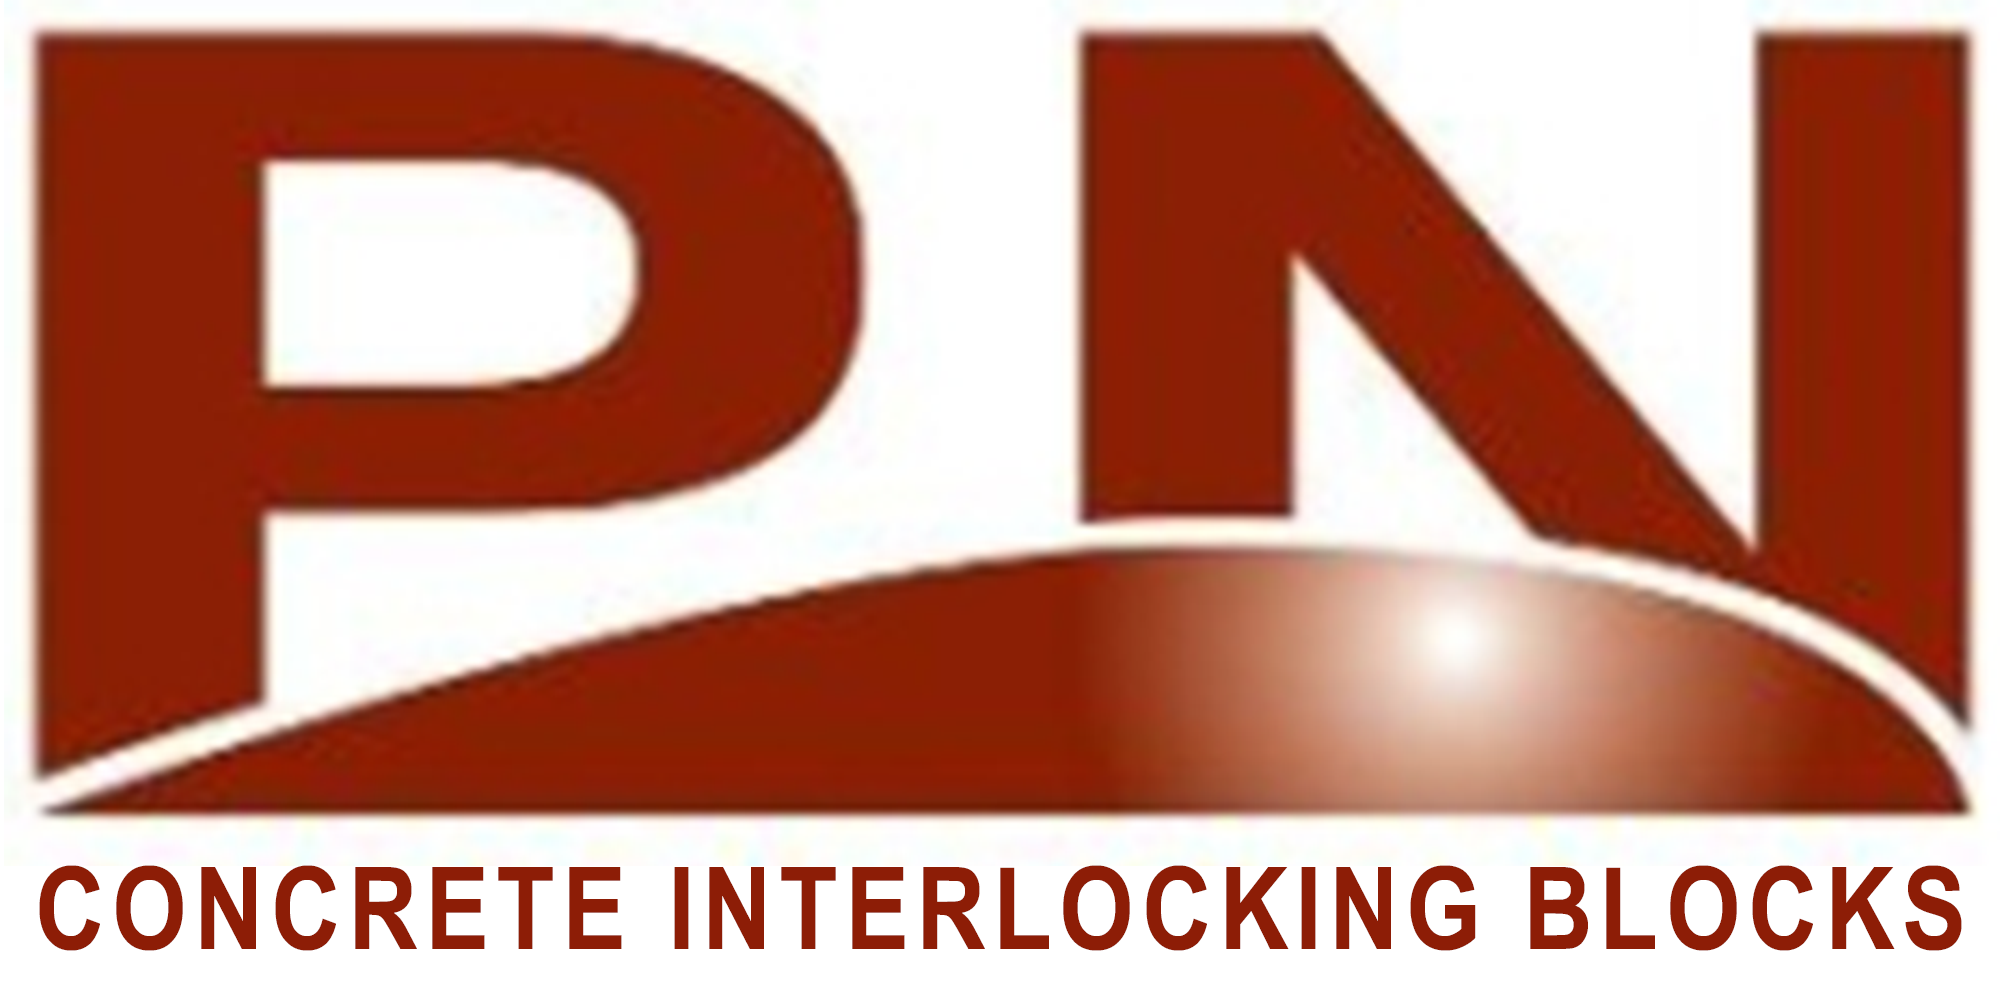 PN Concrete Interlocking Blocks